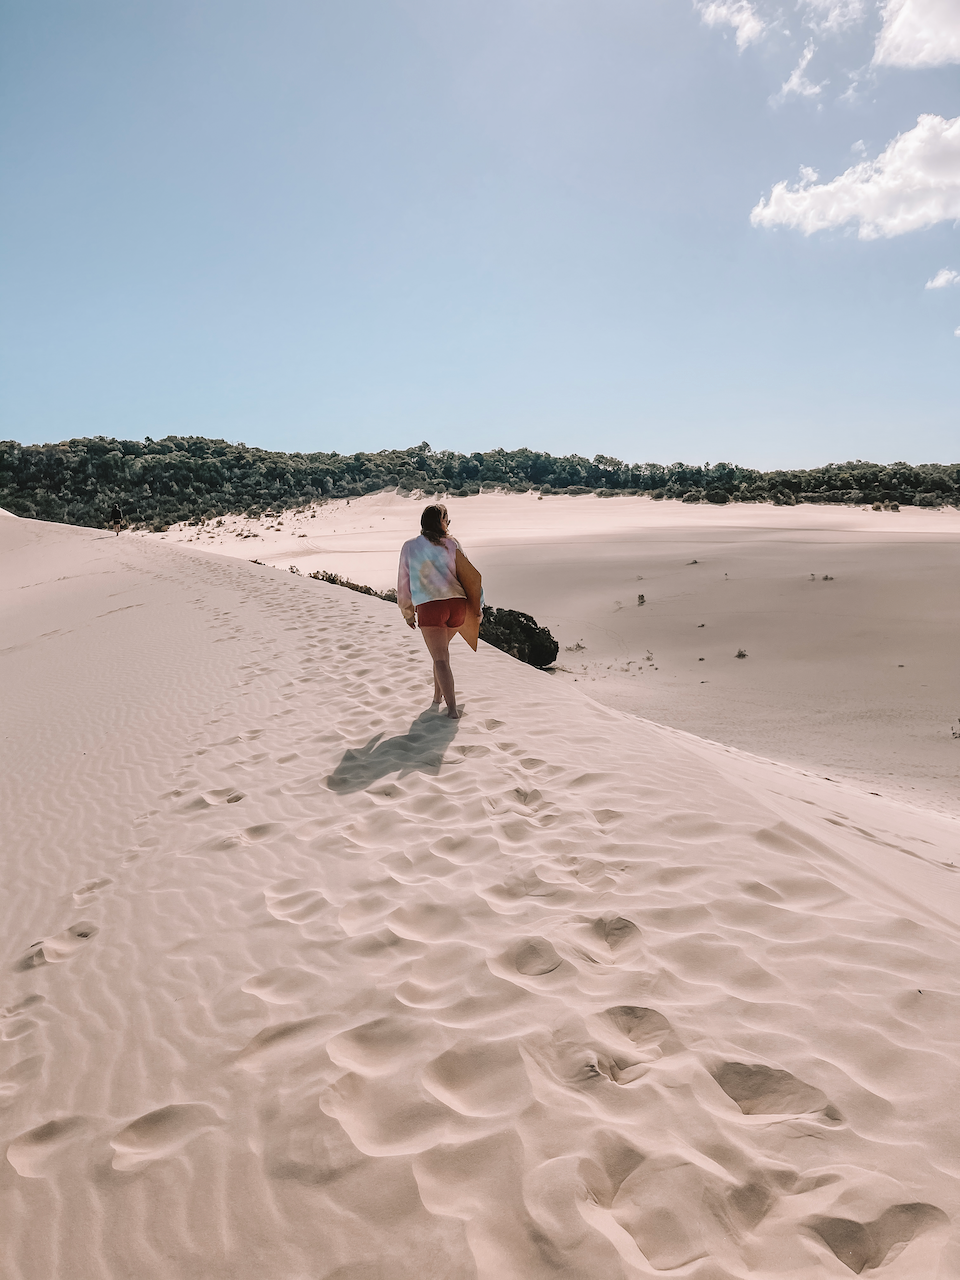 My friend walking on the bid sand dunes - Moreton Island - Queensland - Australia